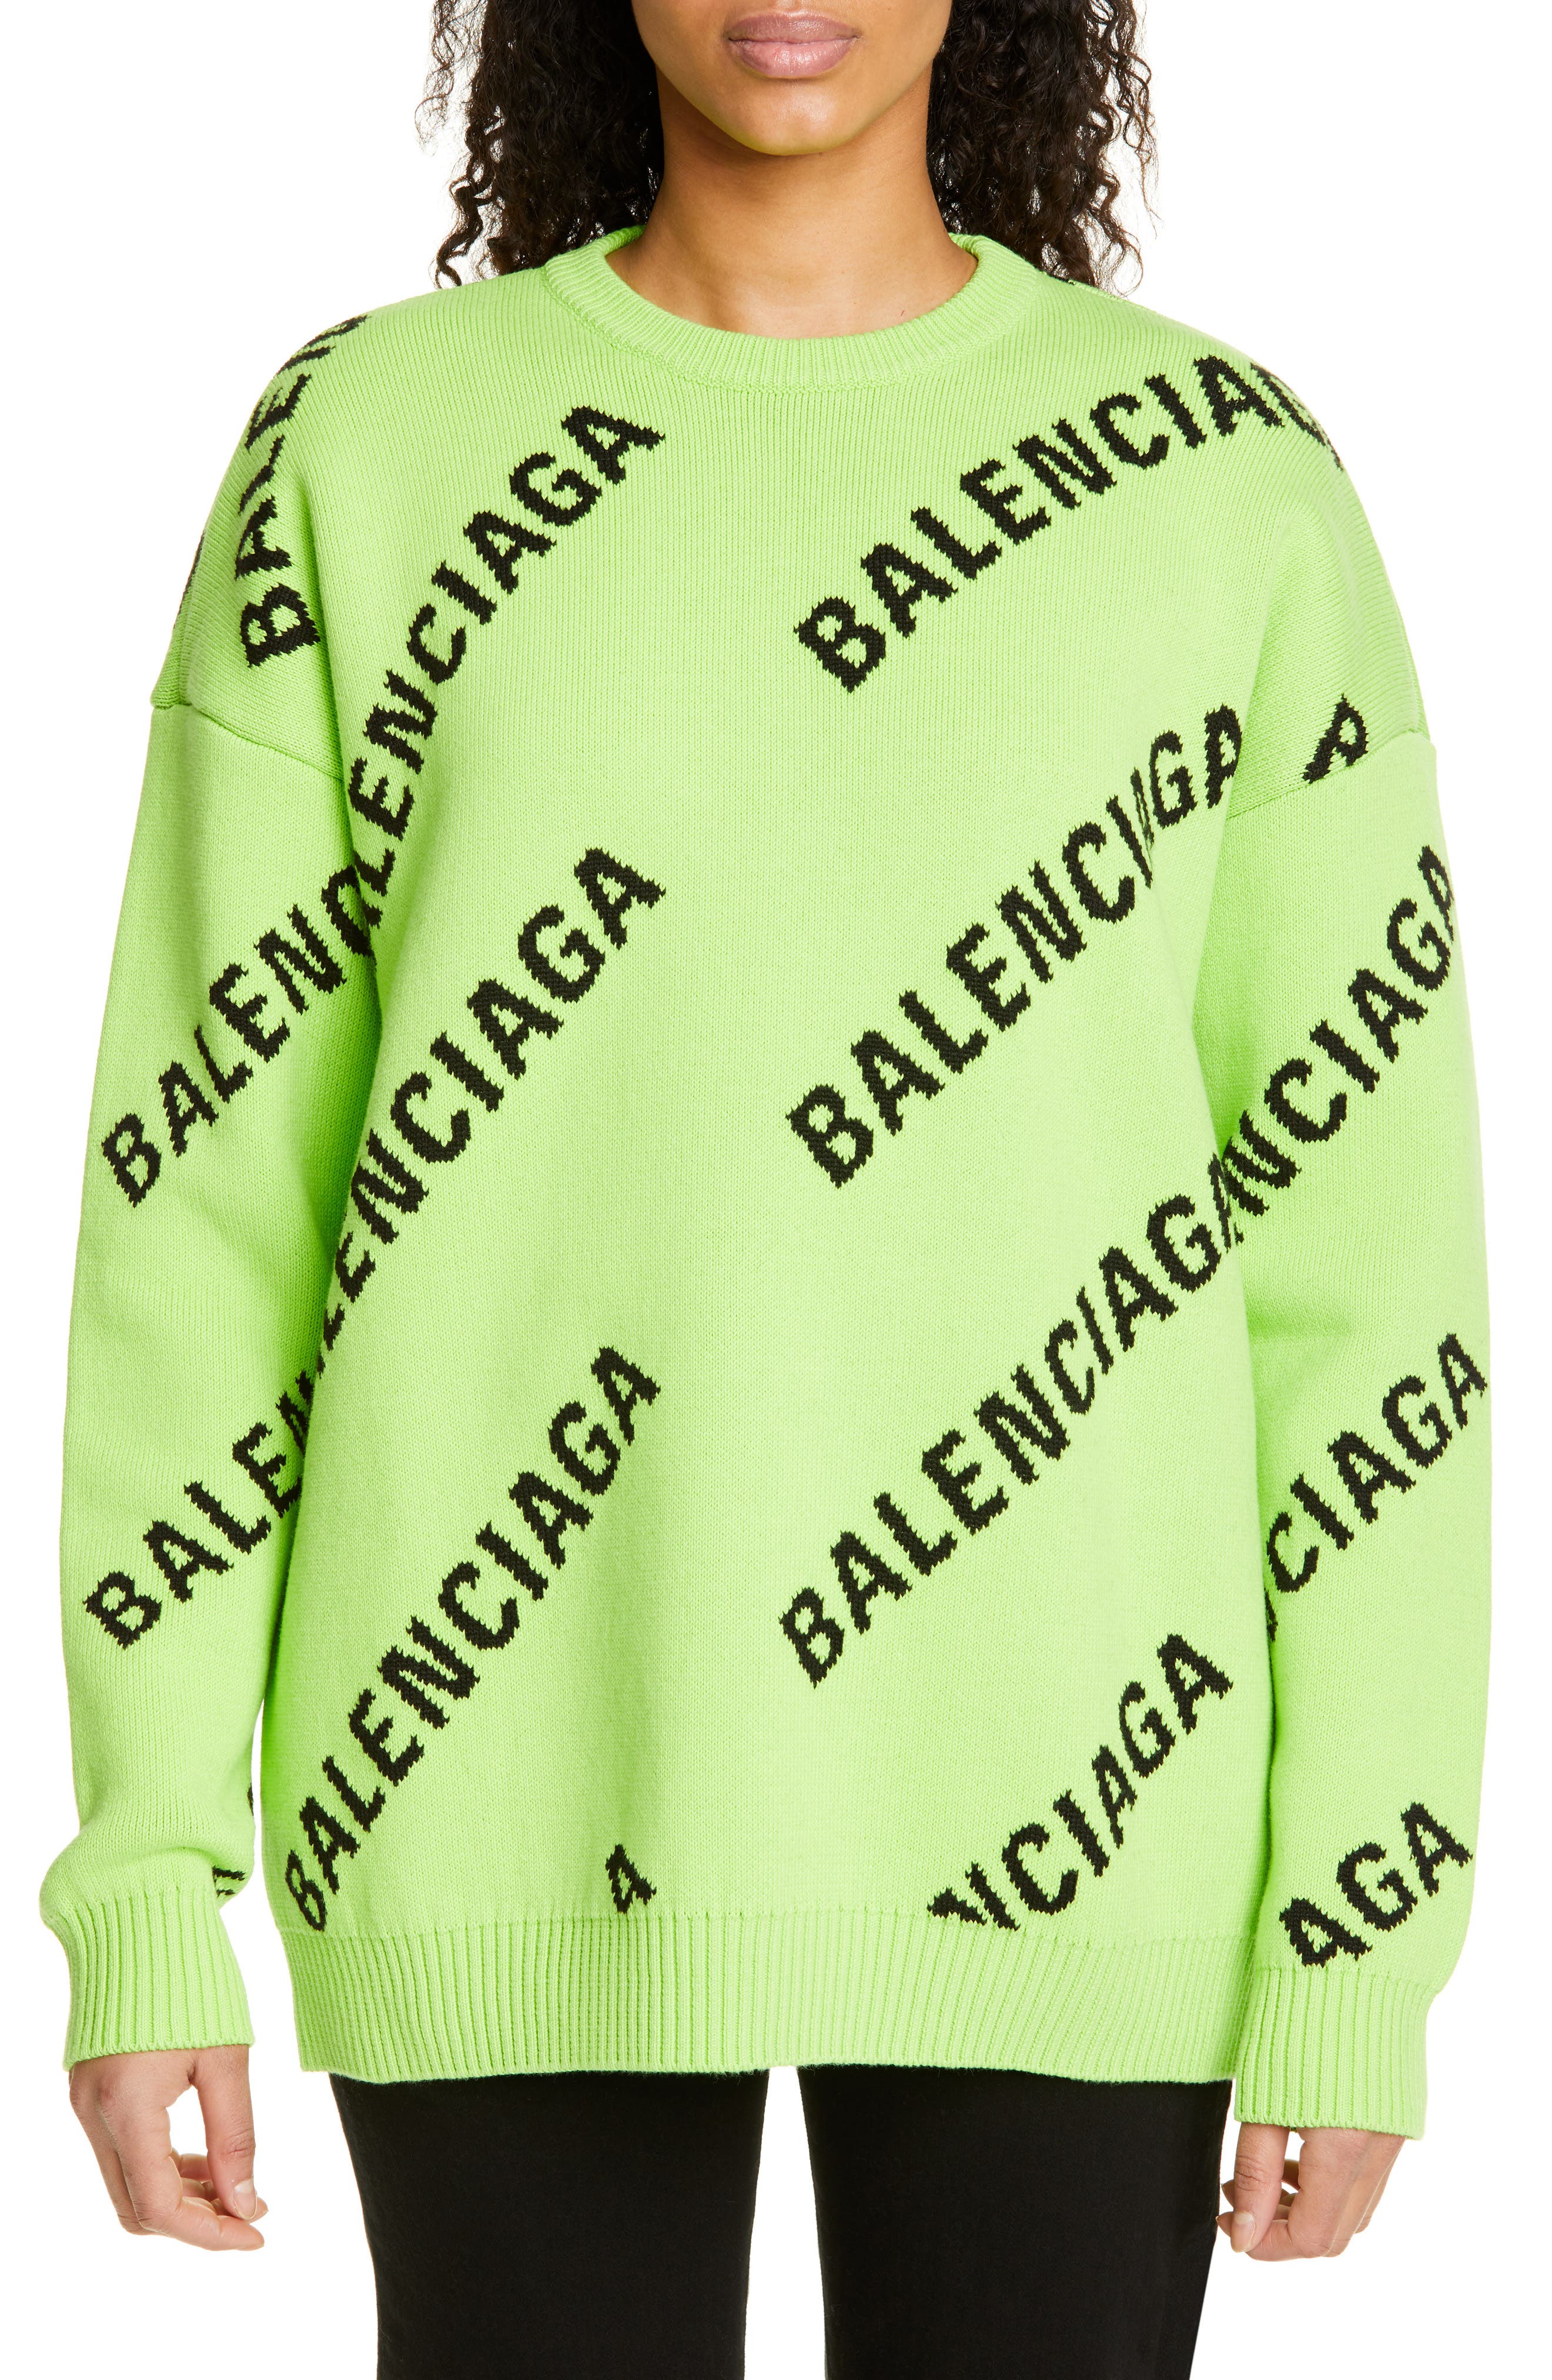 balenciaga crop top hoodie